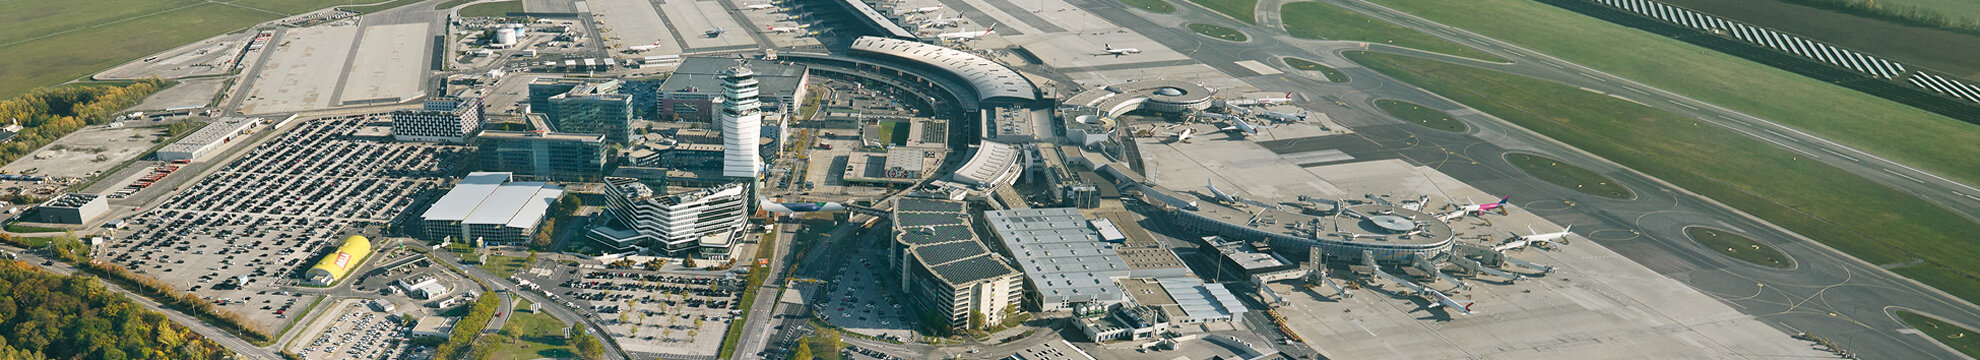 Flughafen Wien AG